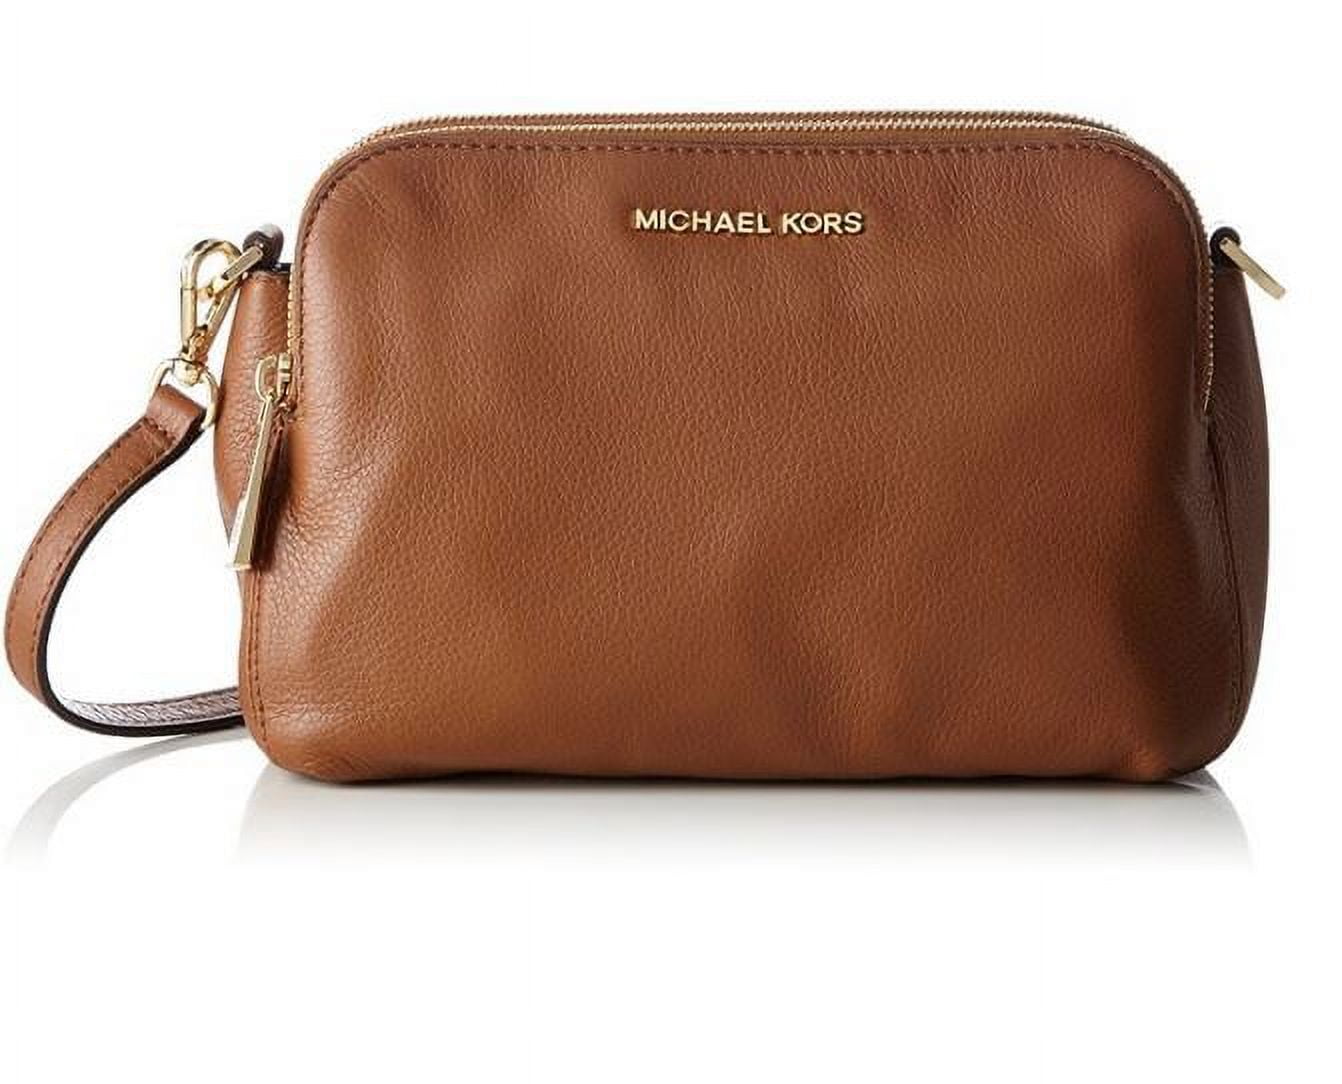 Michael Kors Selma Studded Tan Leather Crossbody Bag in Brown